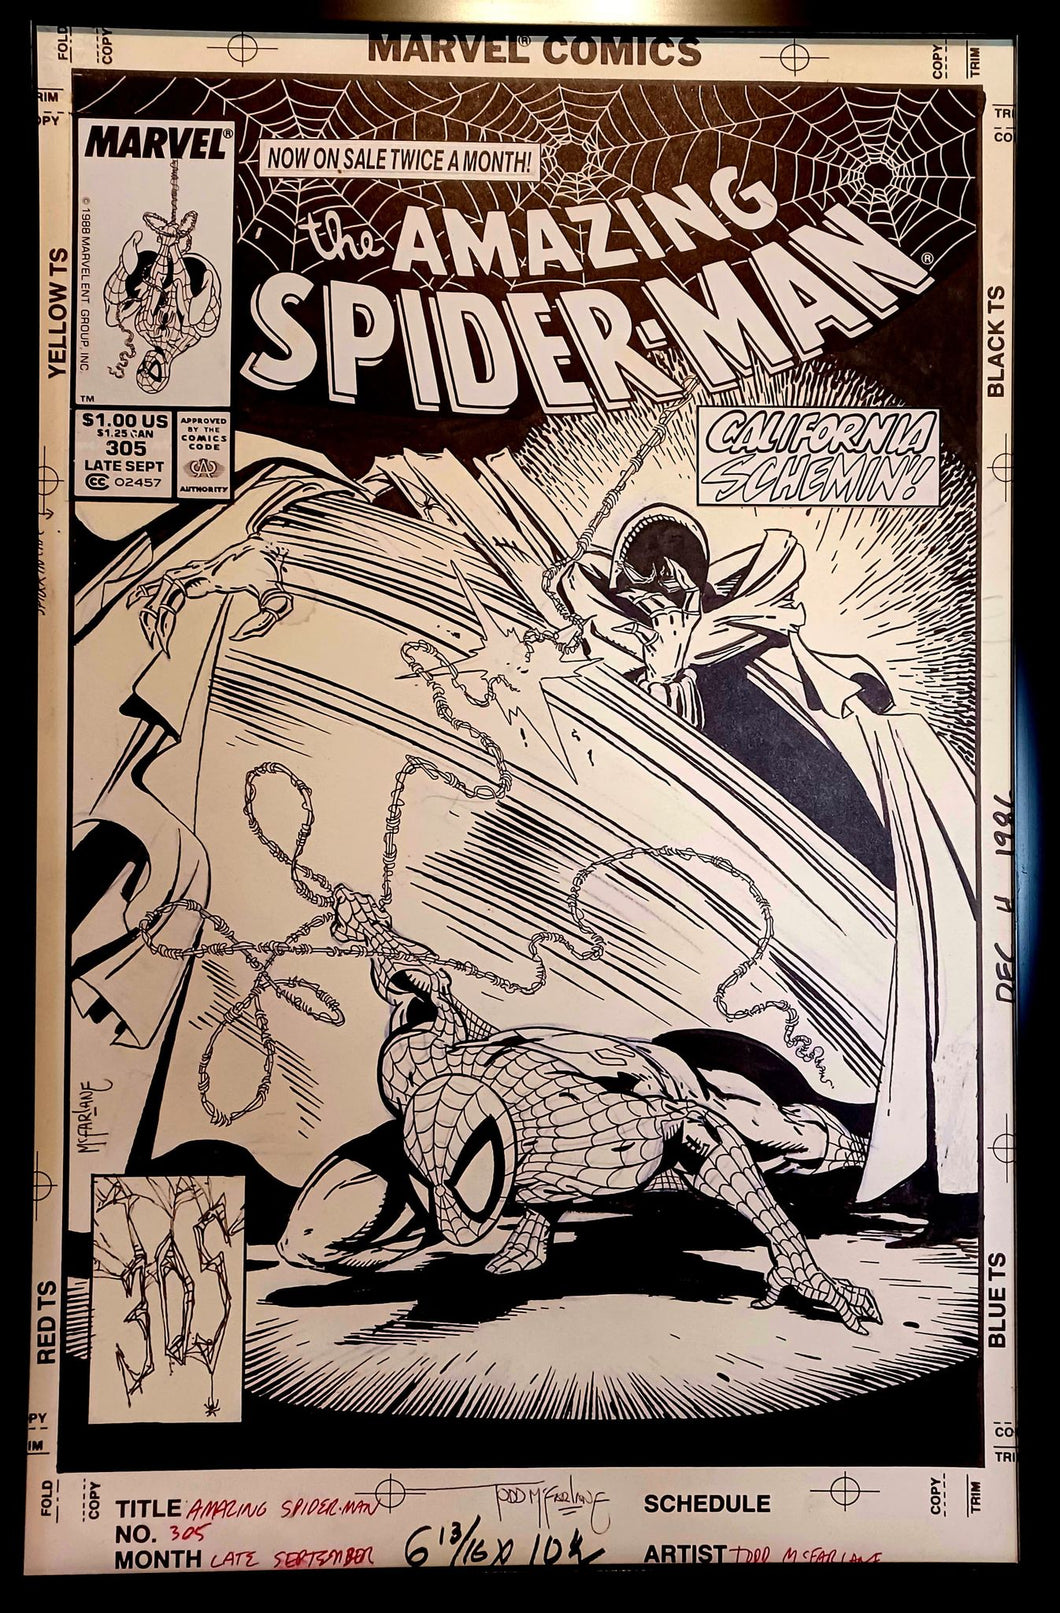 Amazing Spider-Man #305 by Todd McFarlane 11x17 FRAMED Original Art Print Comic Poster